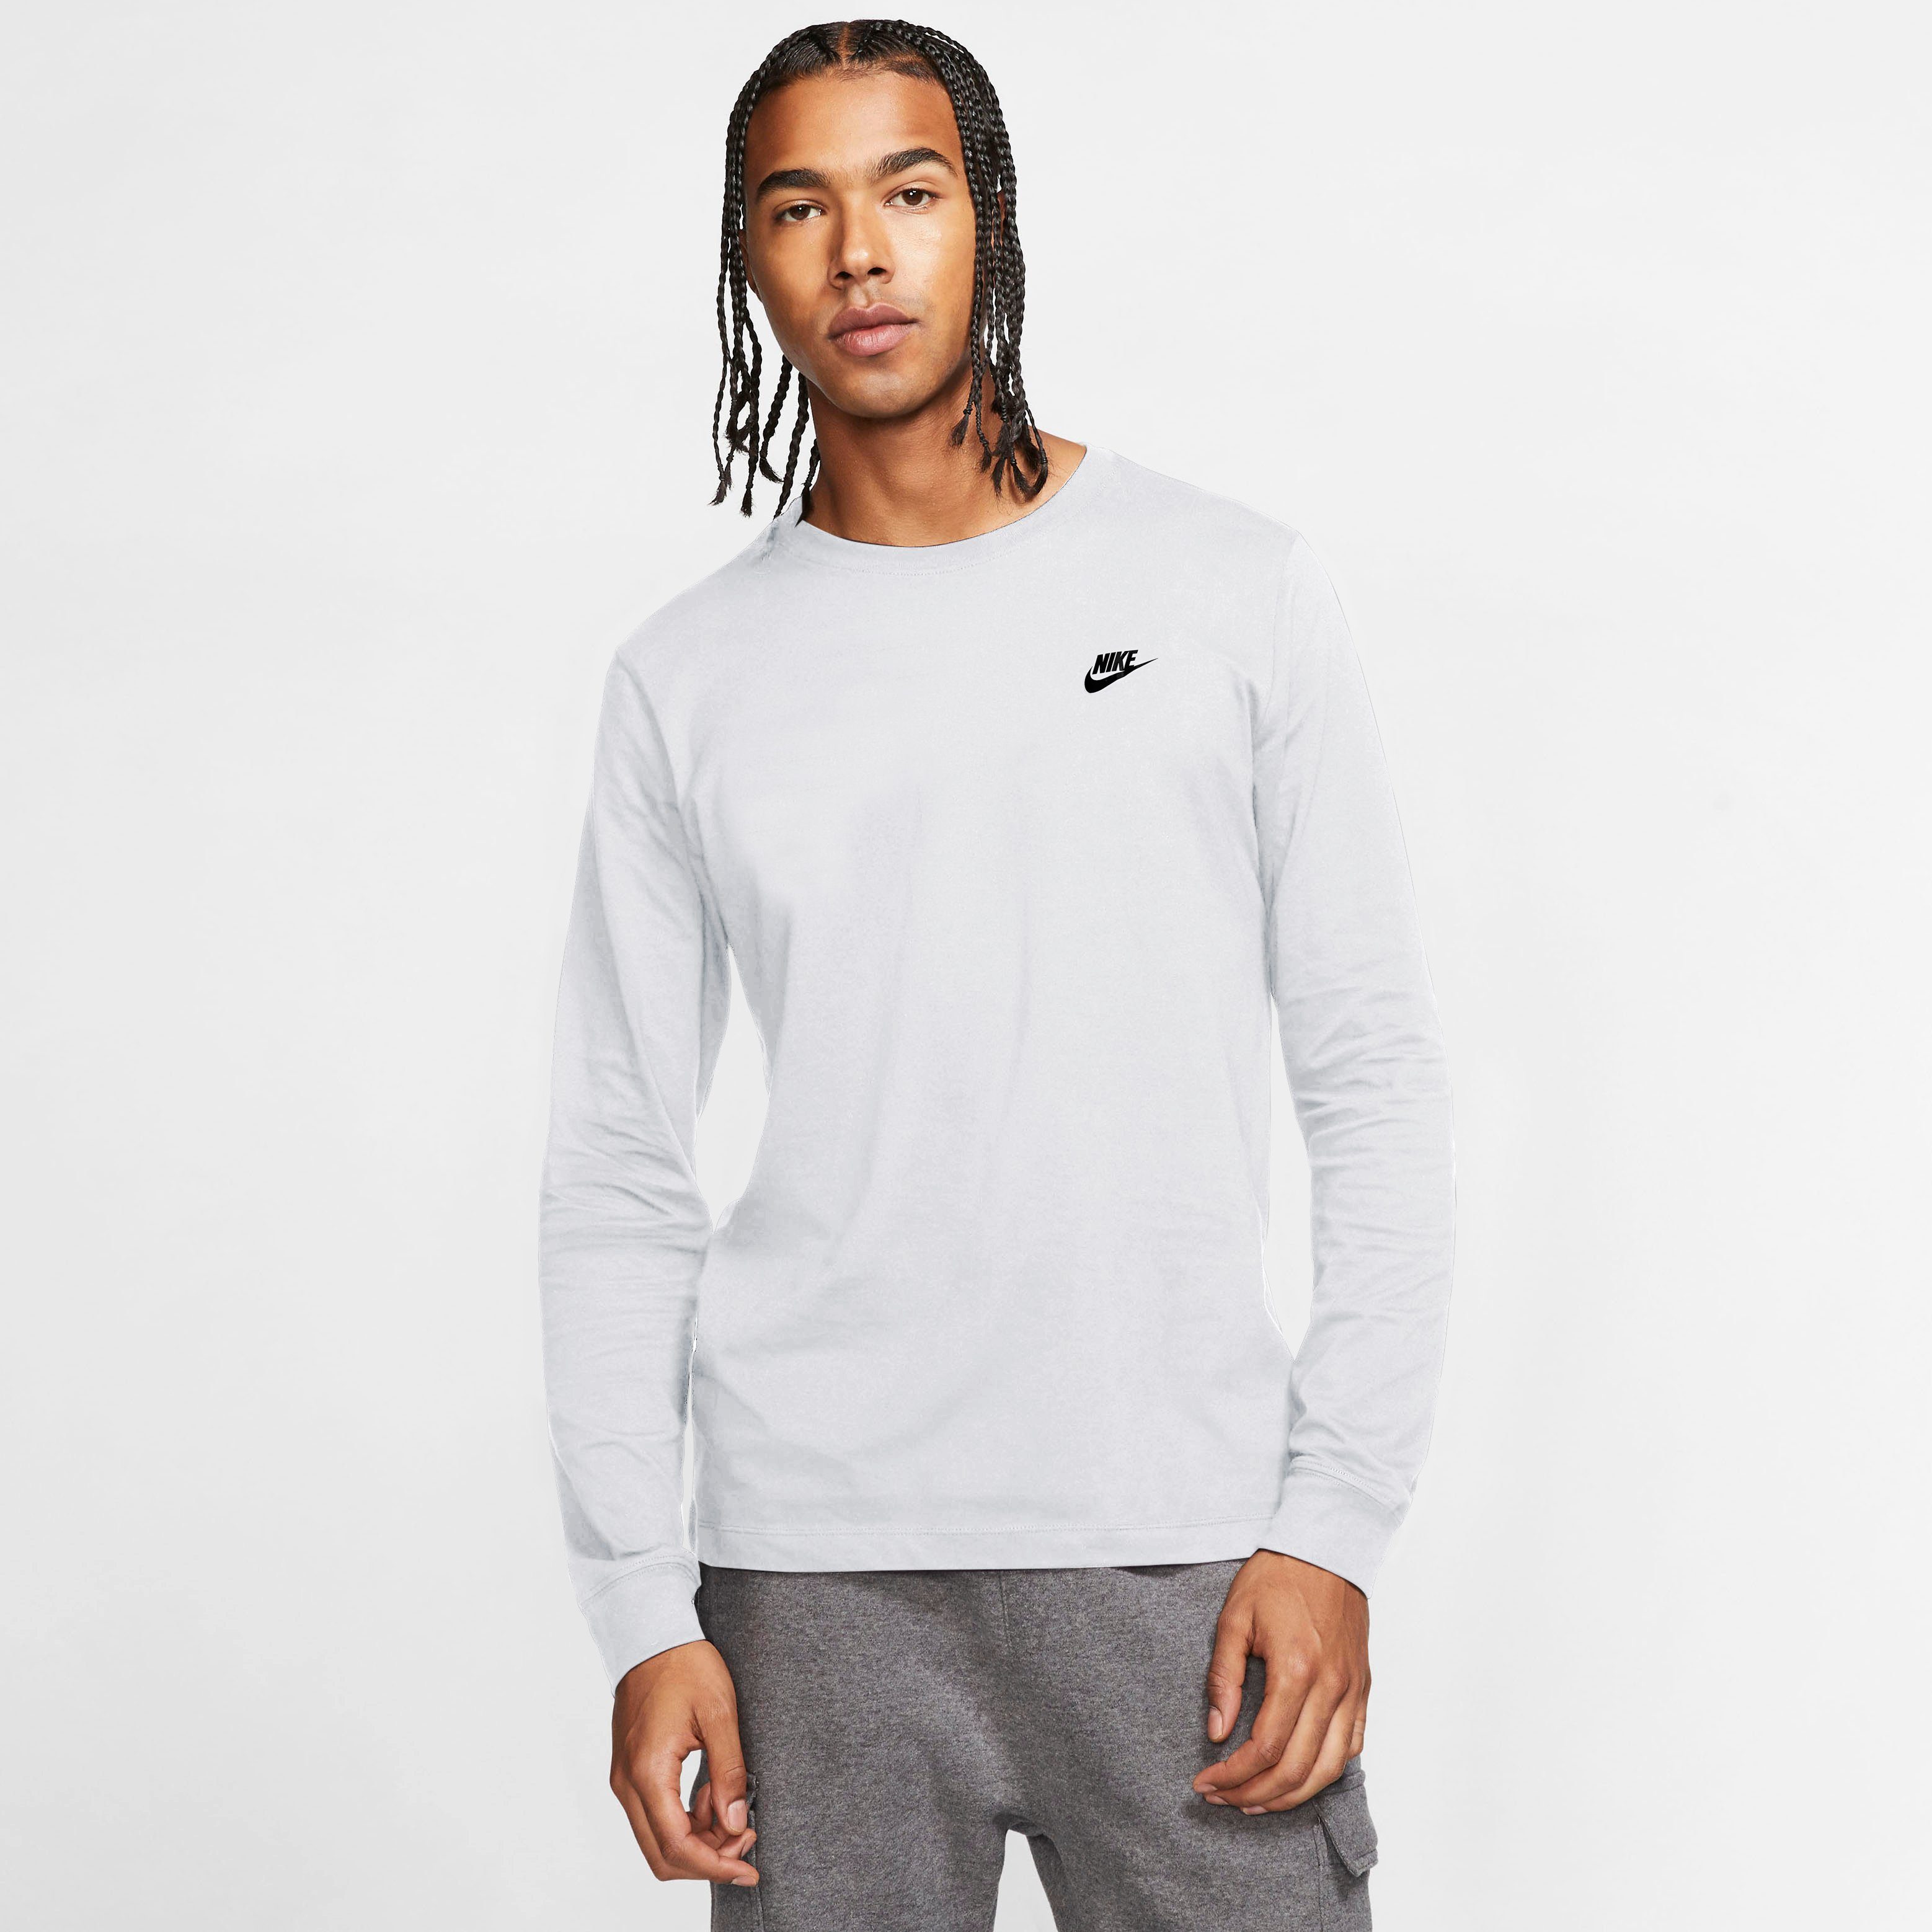 MEN'S Nike LONG-SLEEVE Langarmshirt T-SHIRT Sportswear weiß